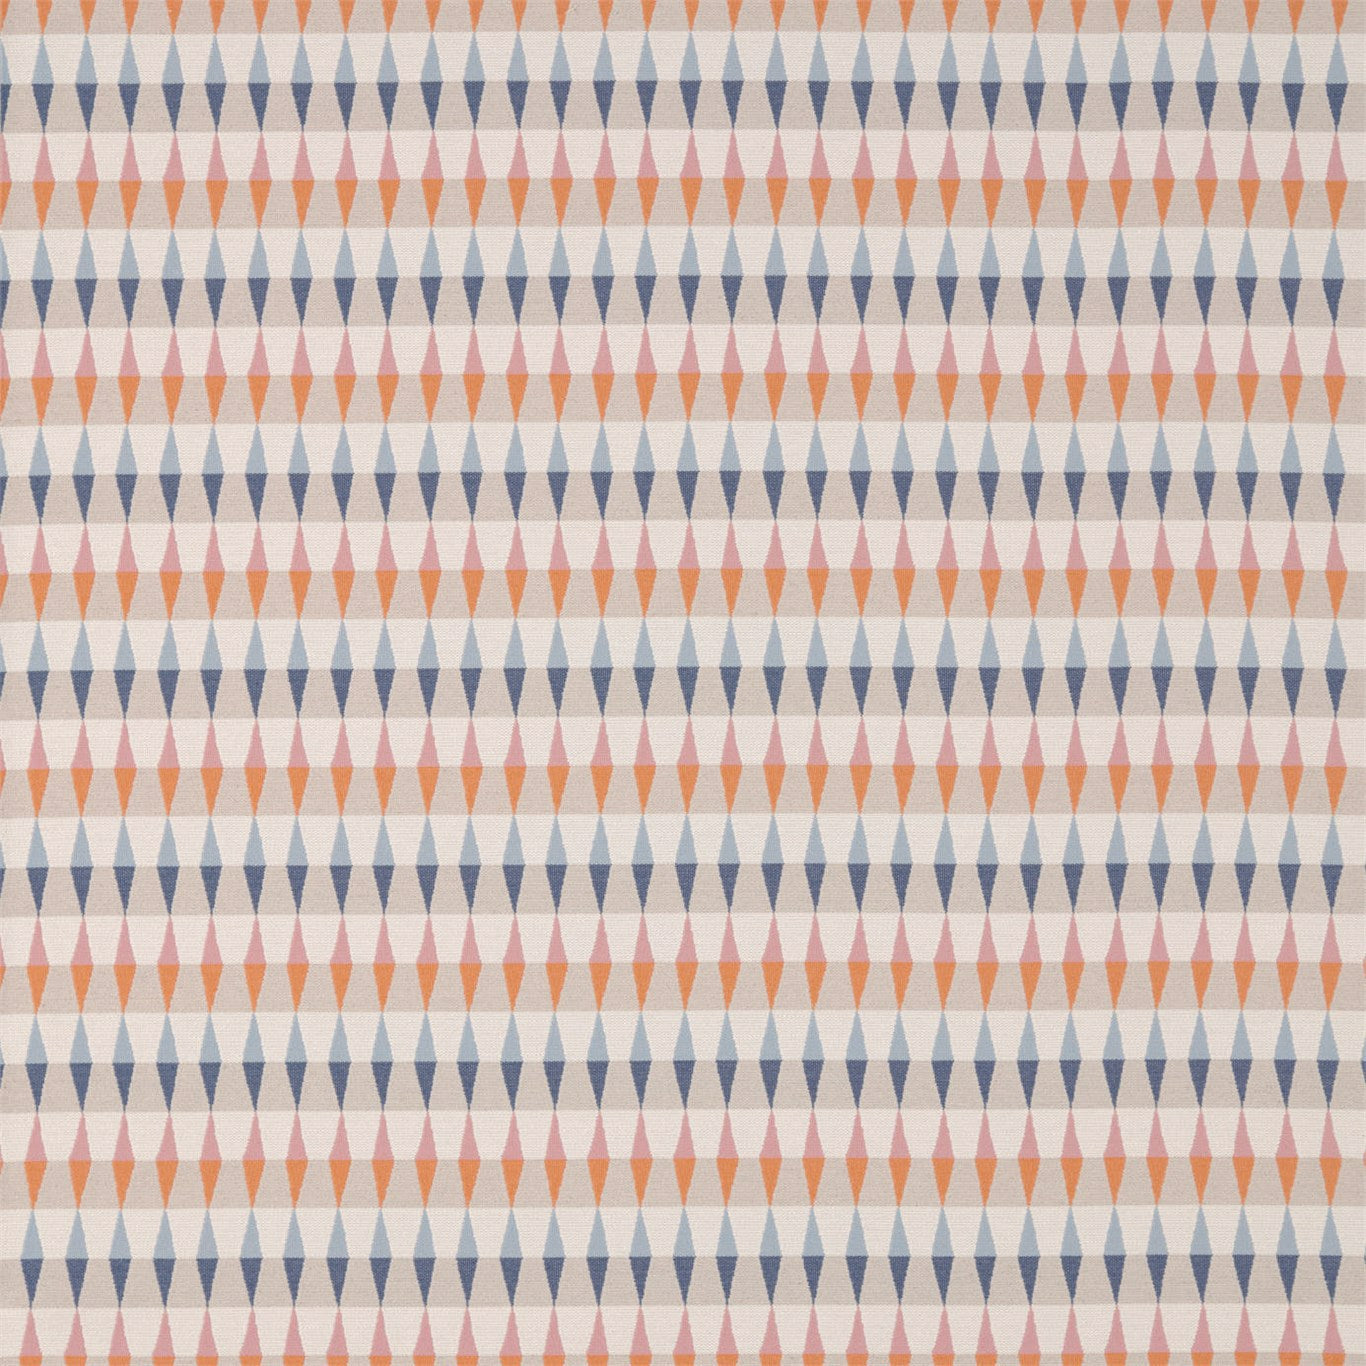 Ampico Fabric by Harlequin - HVIS132093 - Tangerine/Sky/Nude